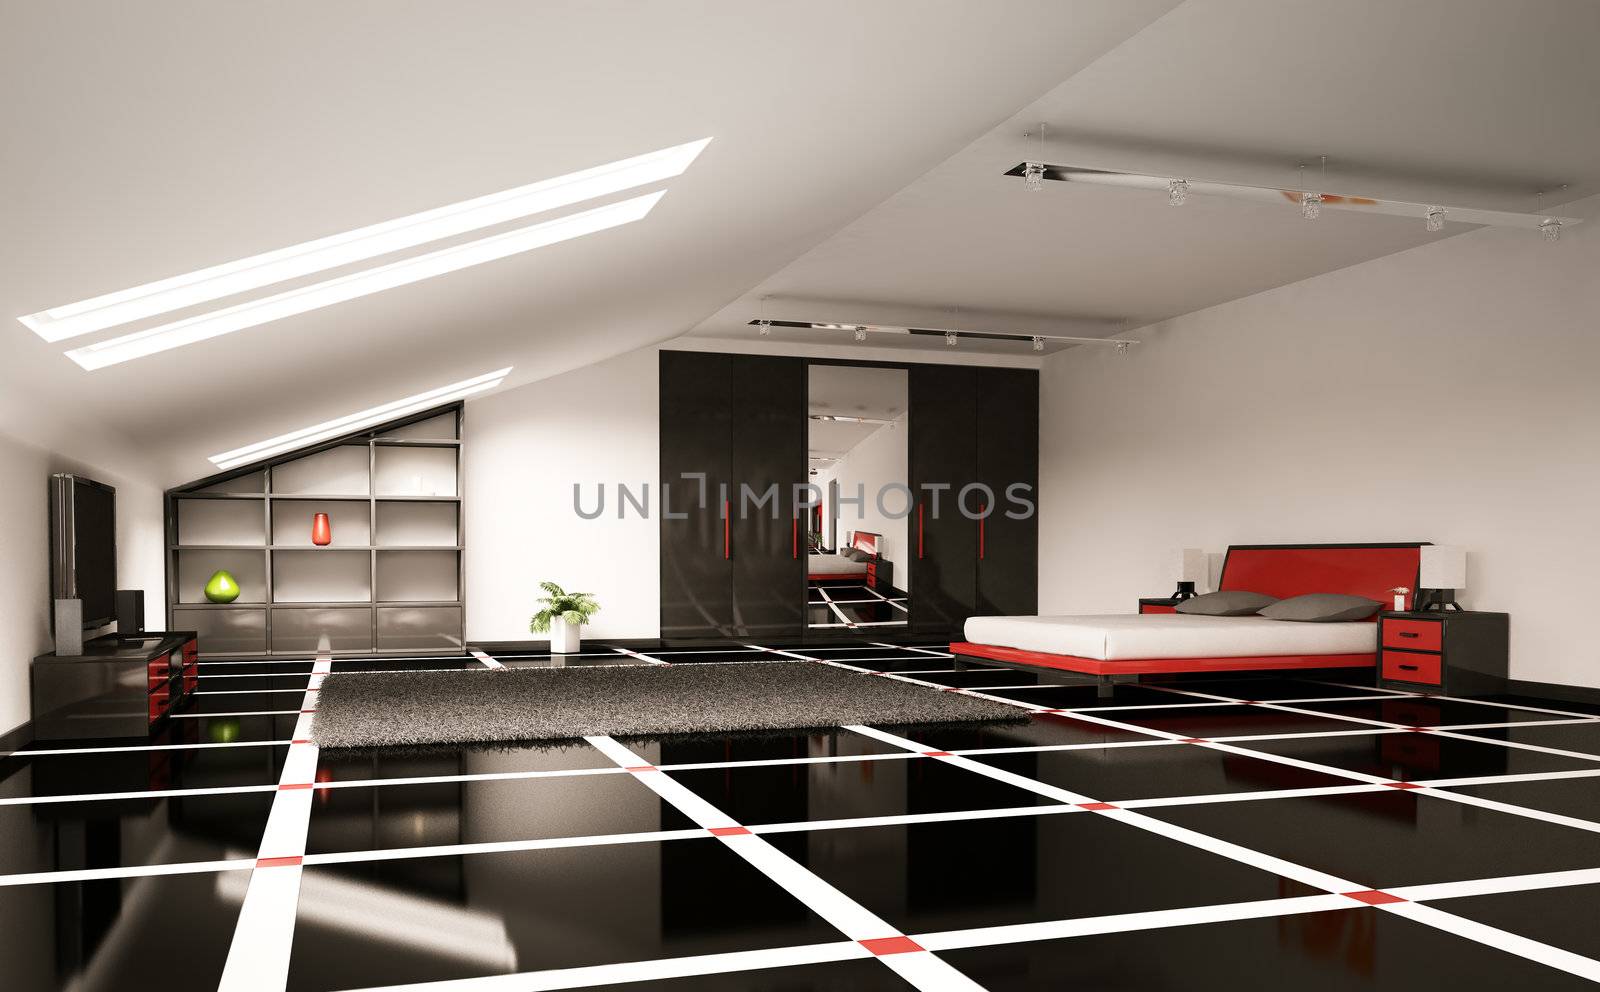 Modern bedroom interior penthouse 3d render